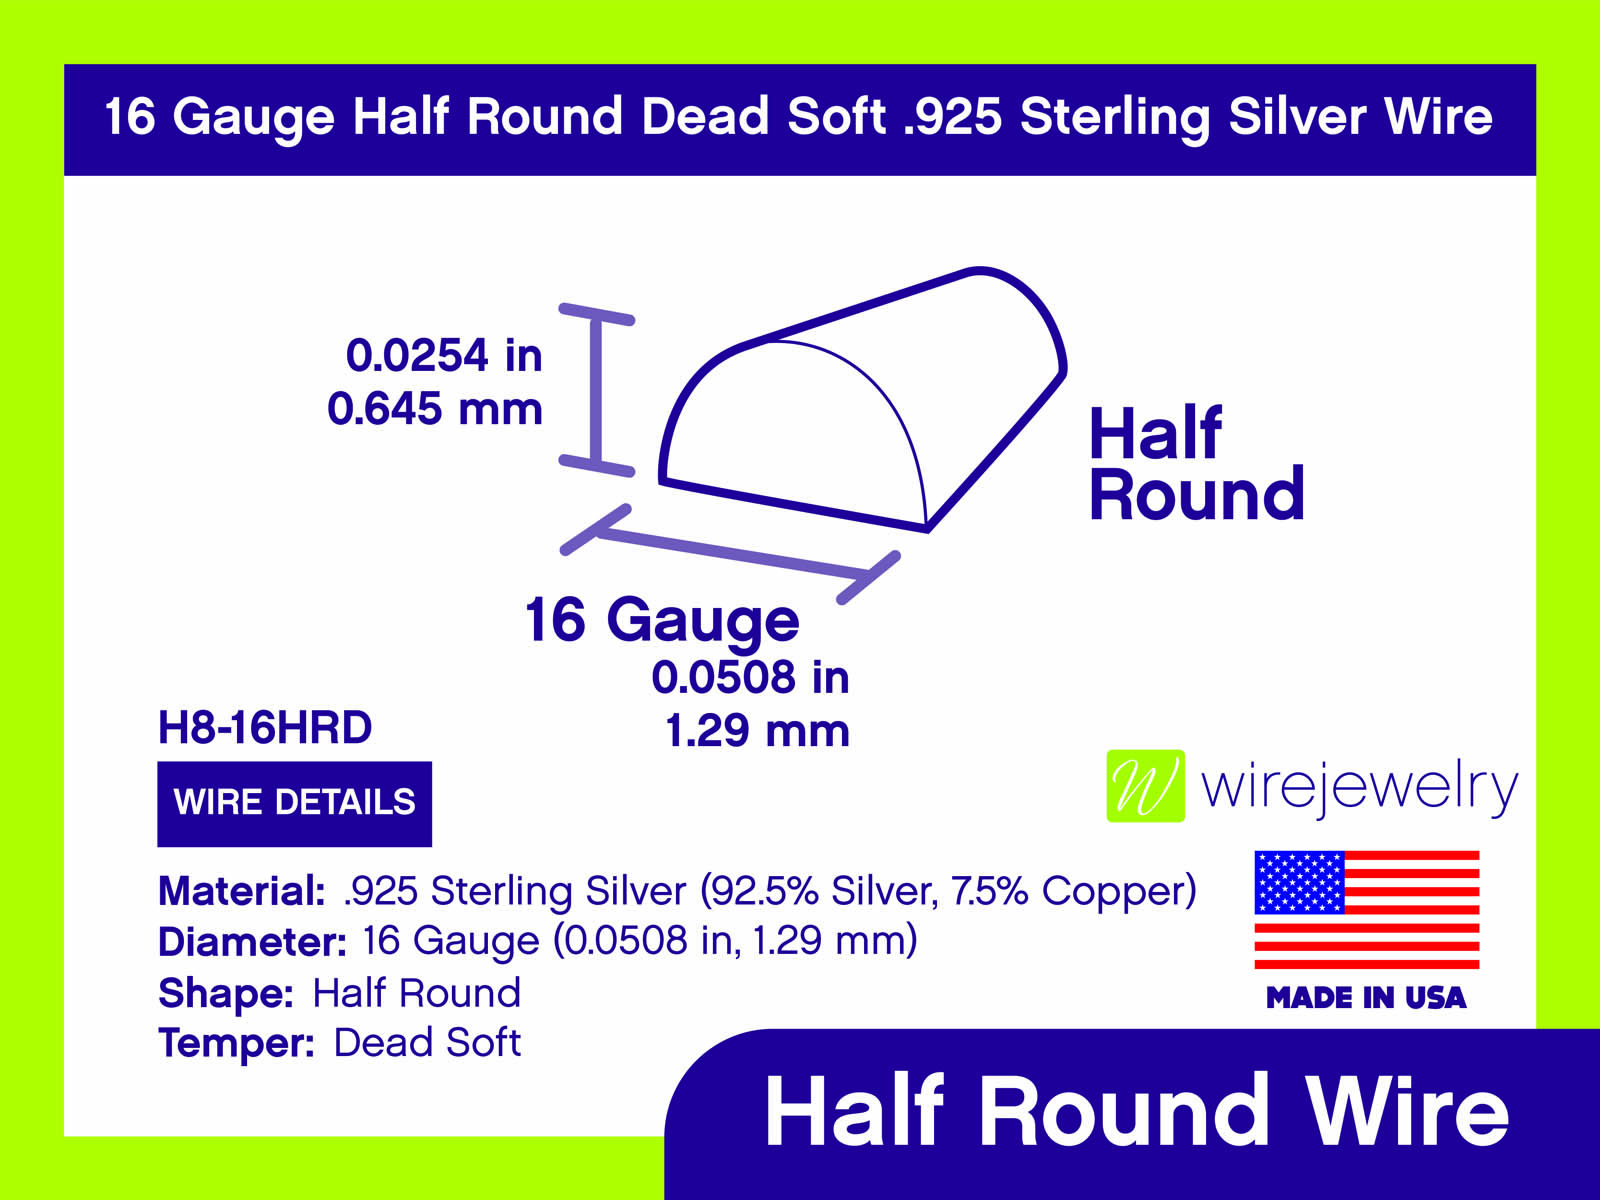 20 Gauge Round Dead Soft .925 Sterling Silver Wire: Wire Jewelry